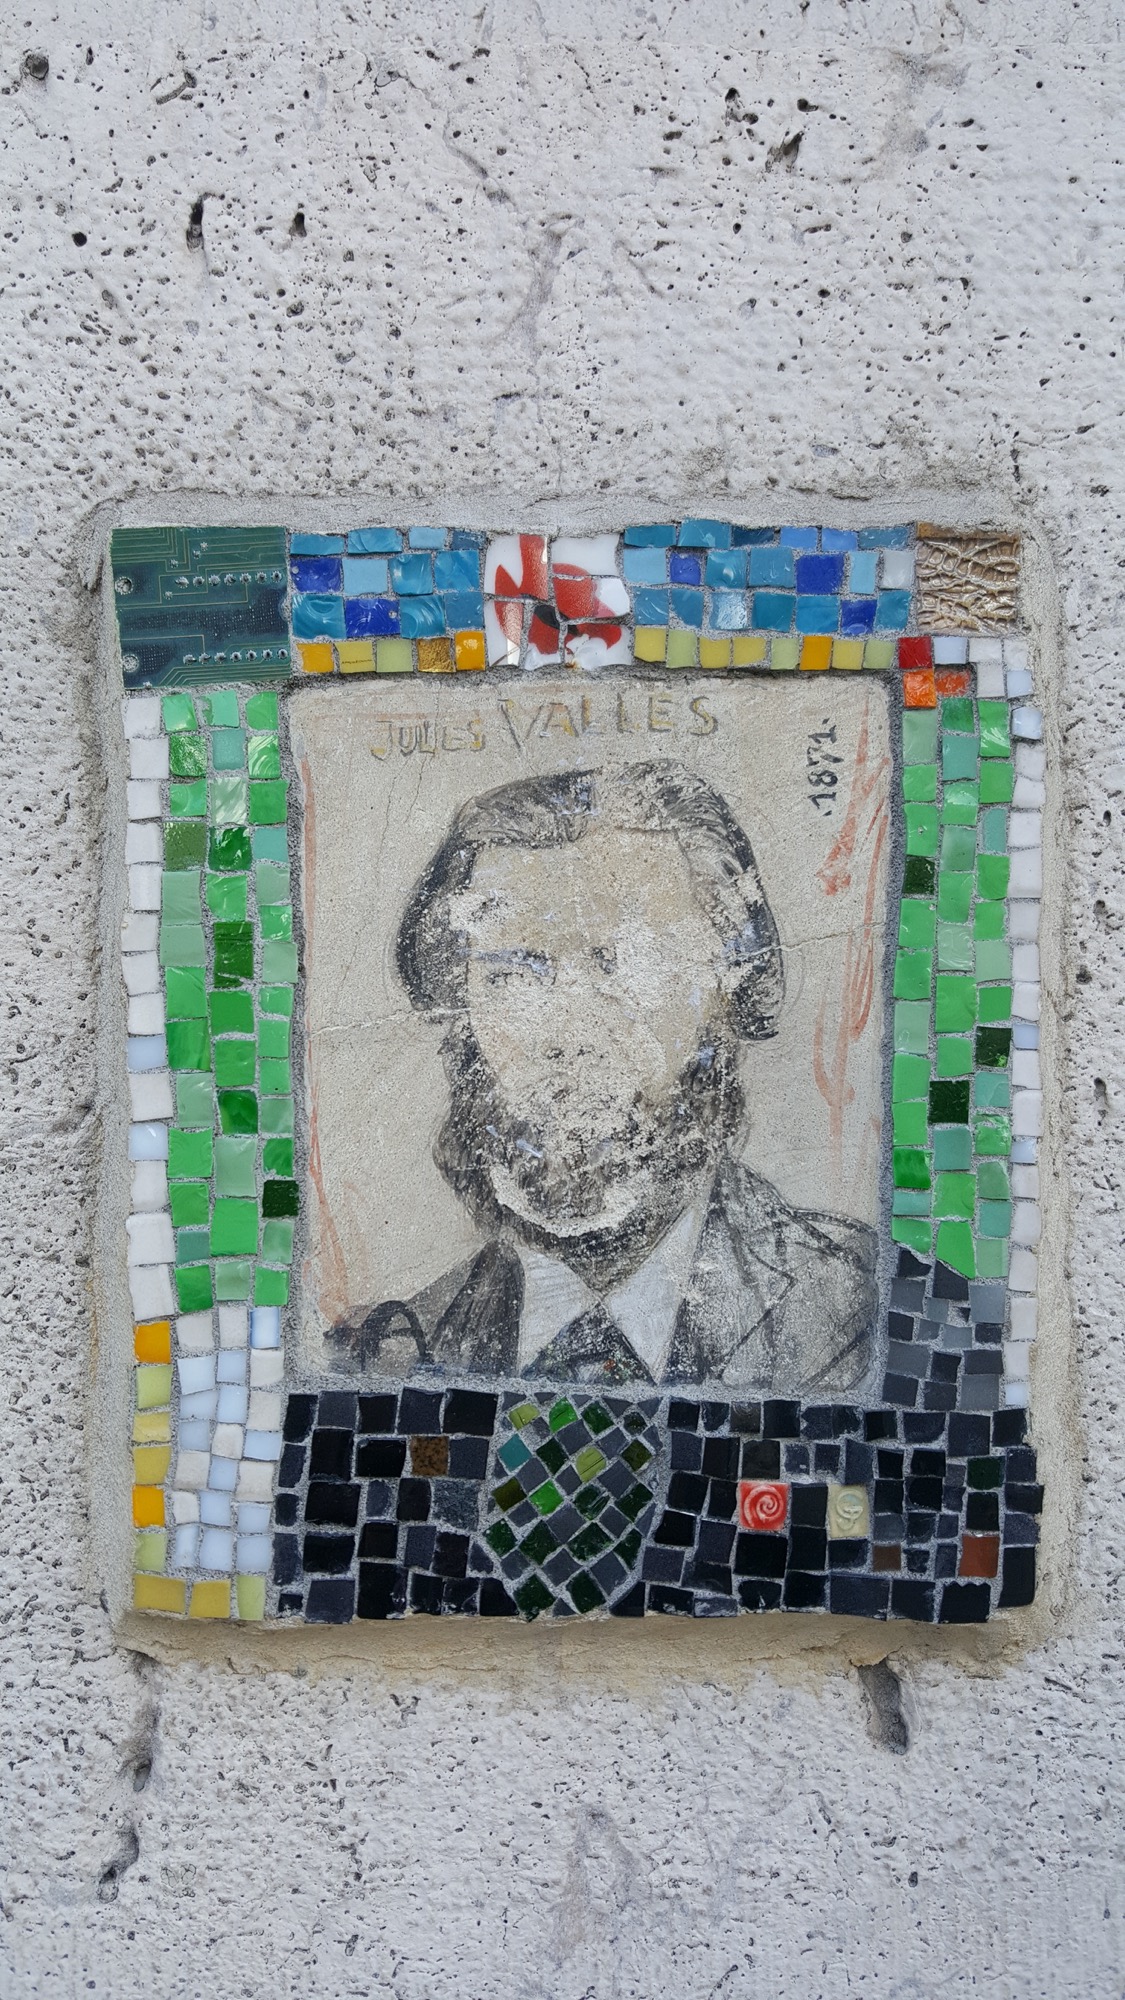 Mosaic 1943 Morèje : Jules Vallès by the artist Morèje captured by Castriaypidi in Paris France